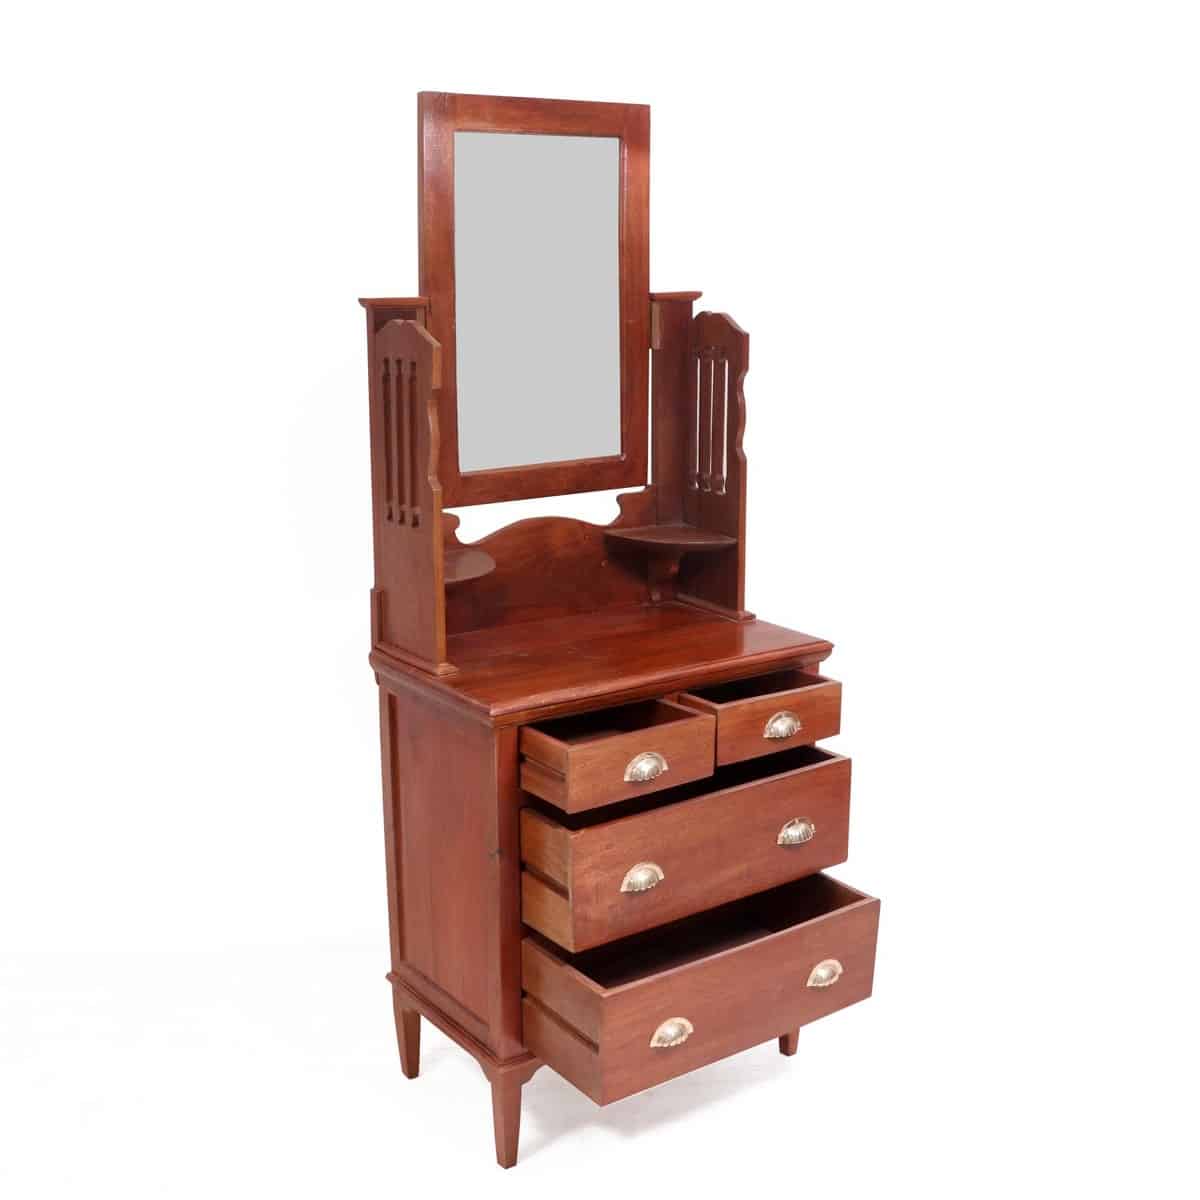 New Dressing Table with Stool 4 Drawers Vanity Set Makeup Desk Black UK  Ship | eBay